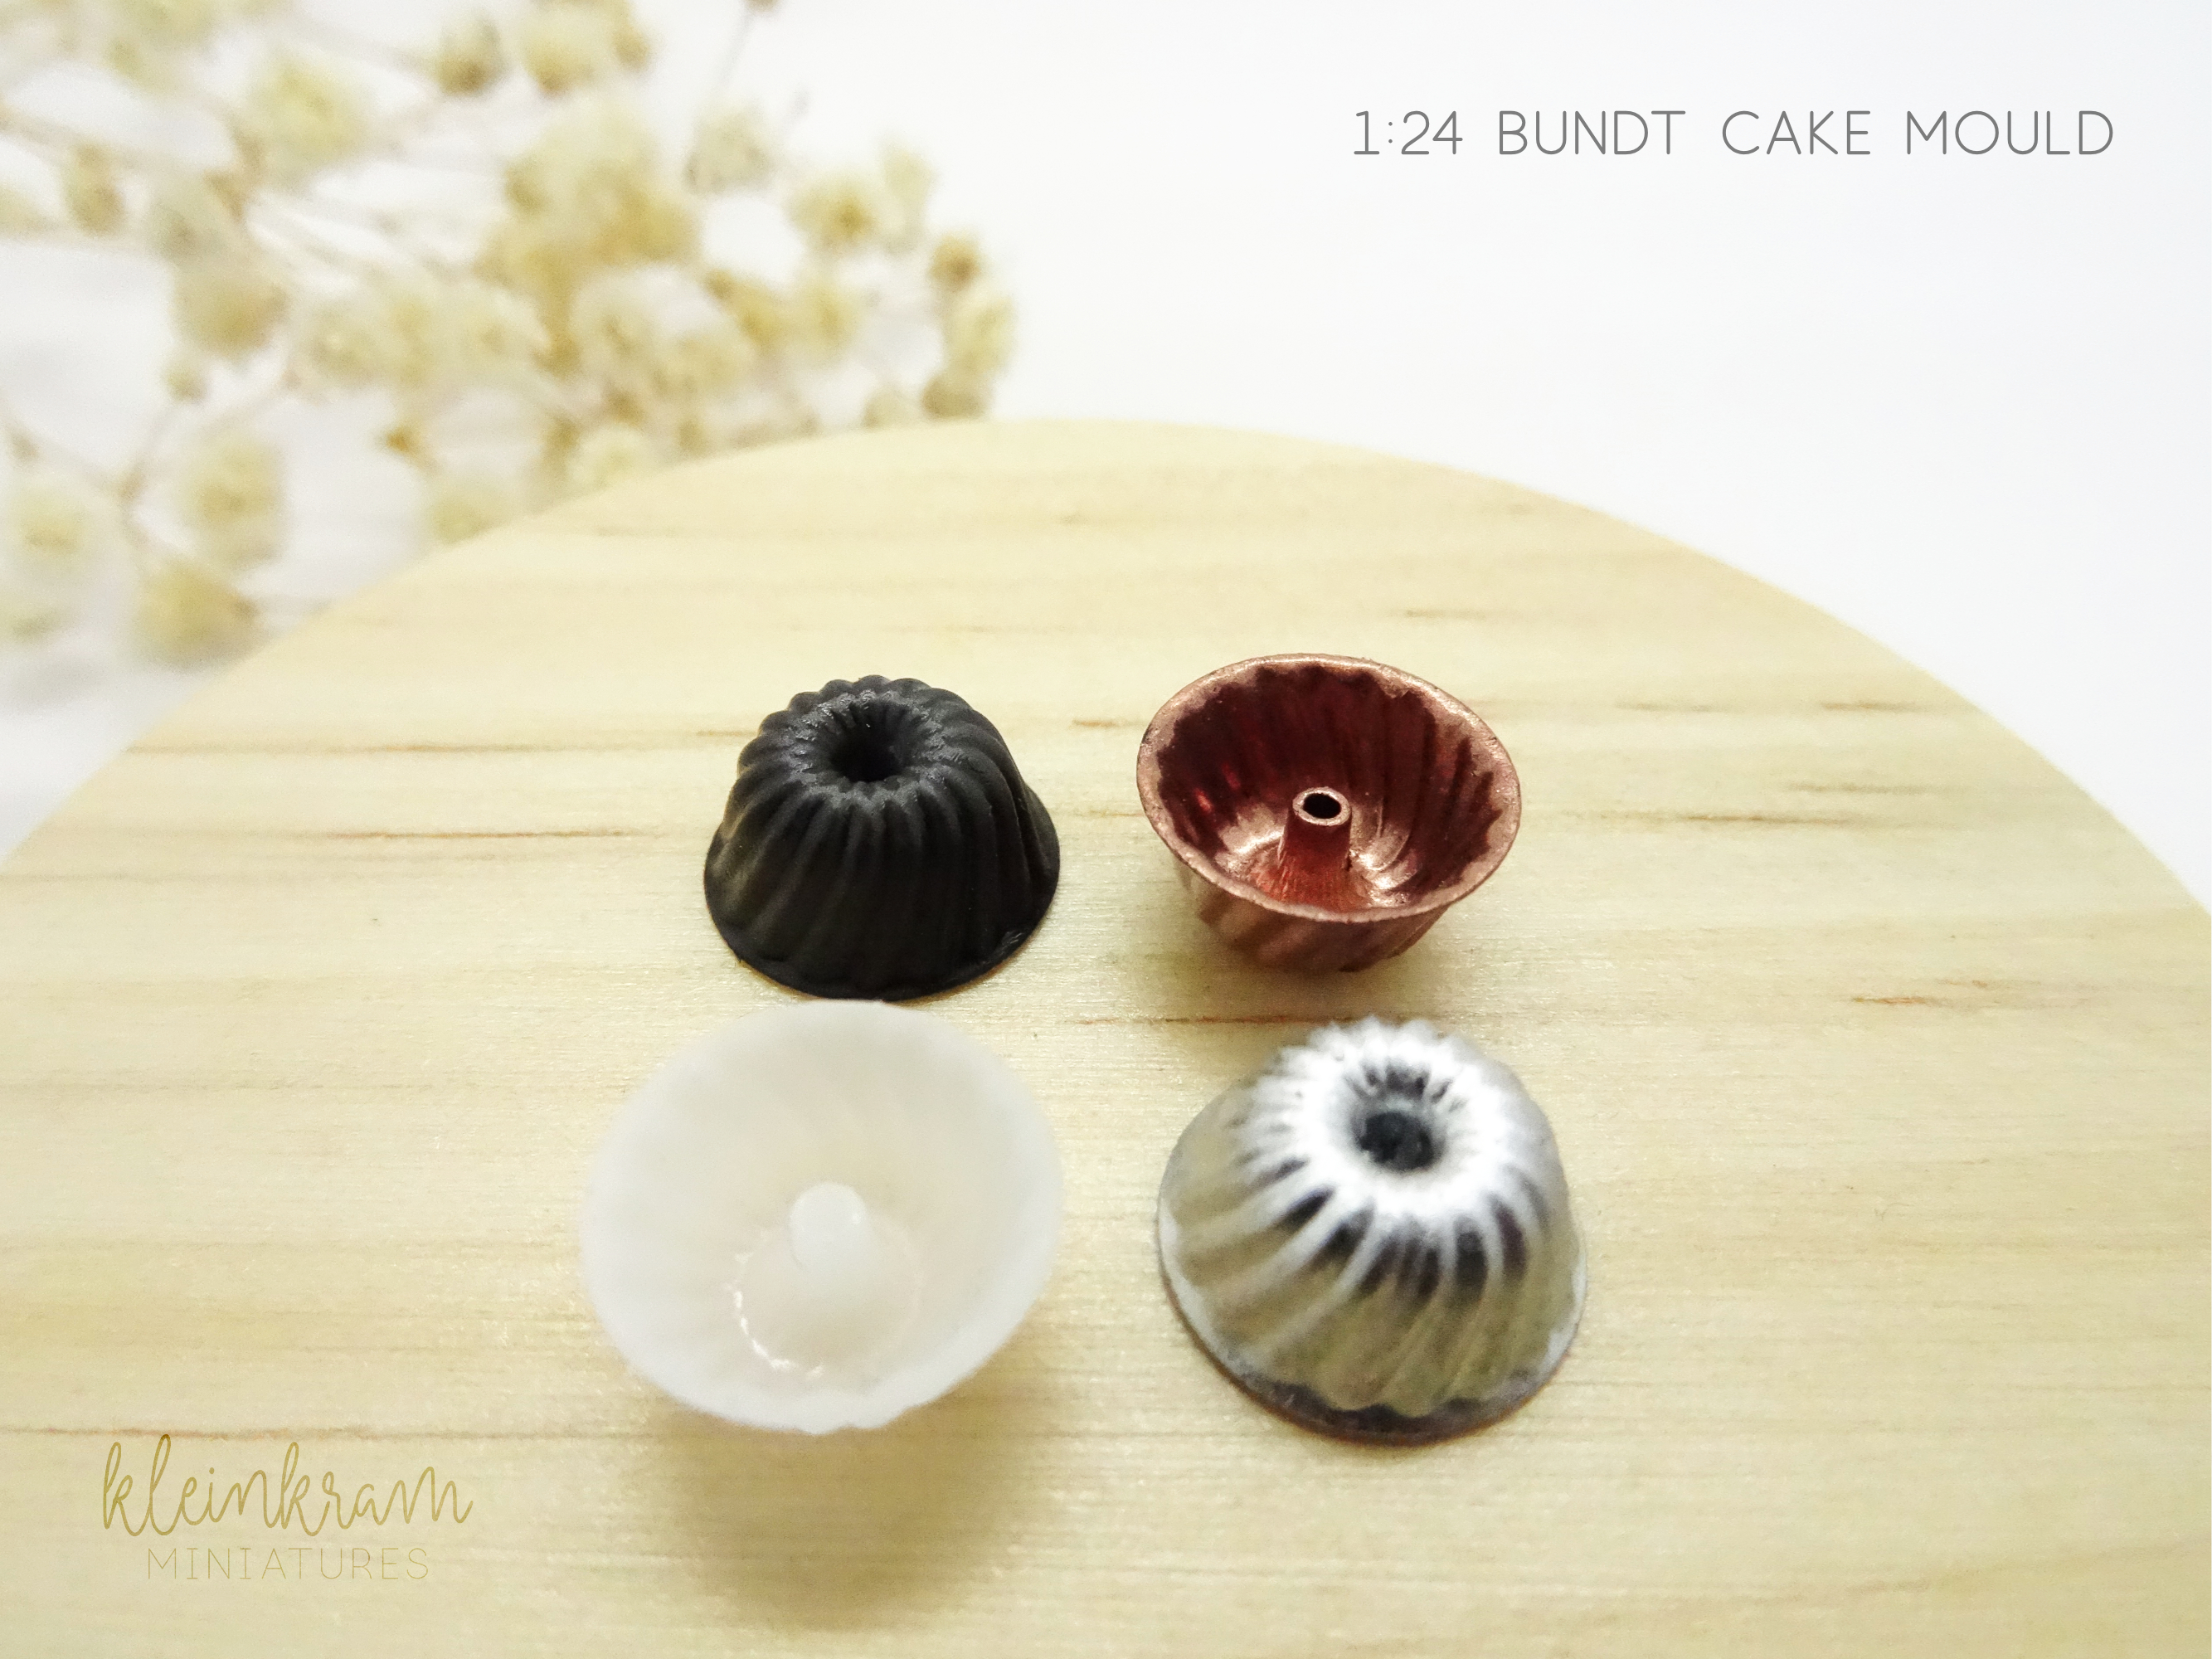 Baking Mould Bundt Cake - 1/24 Miniature